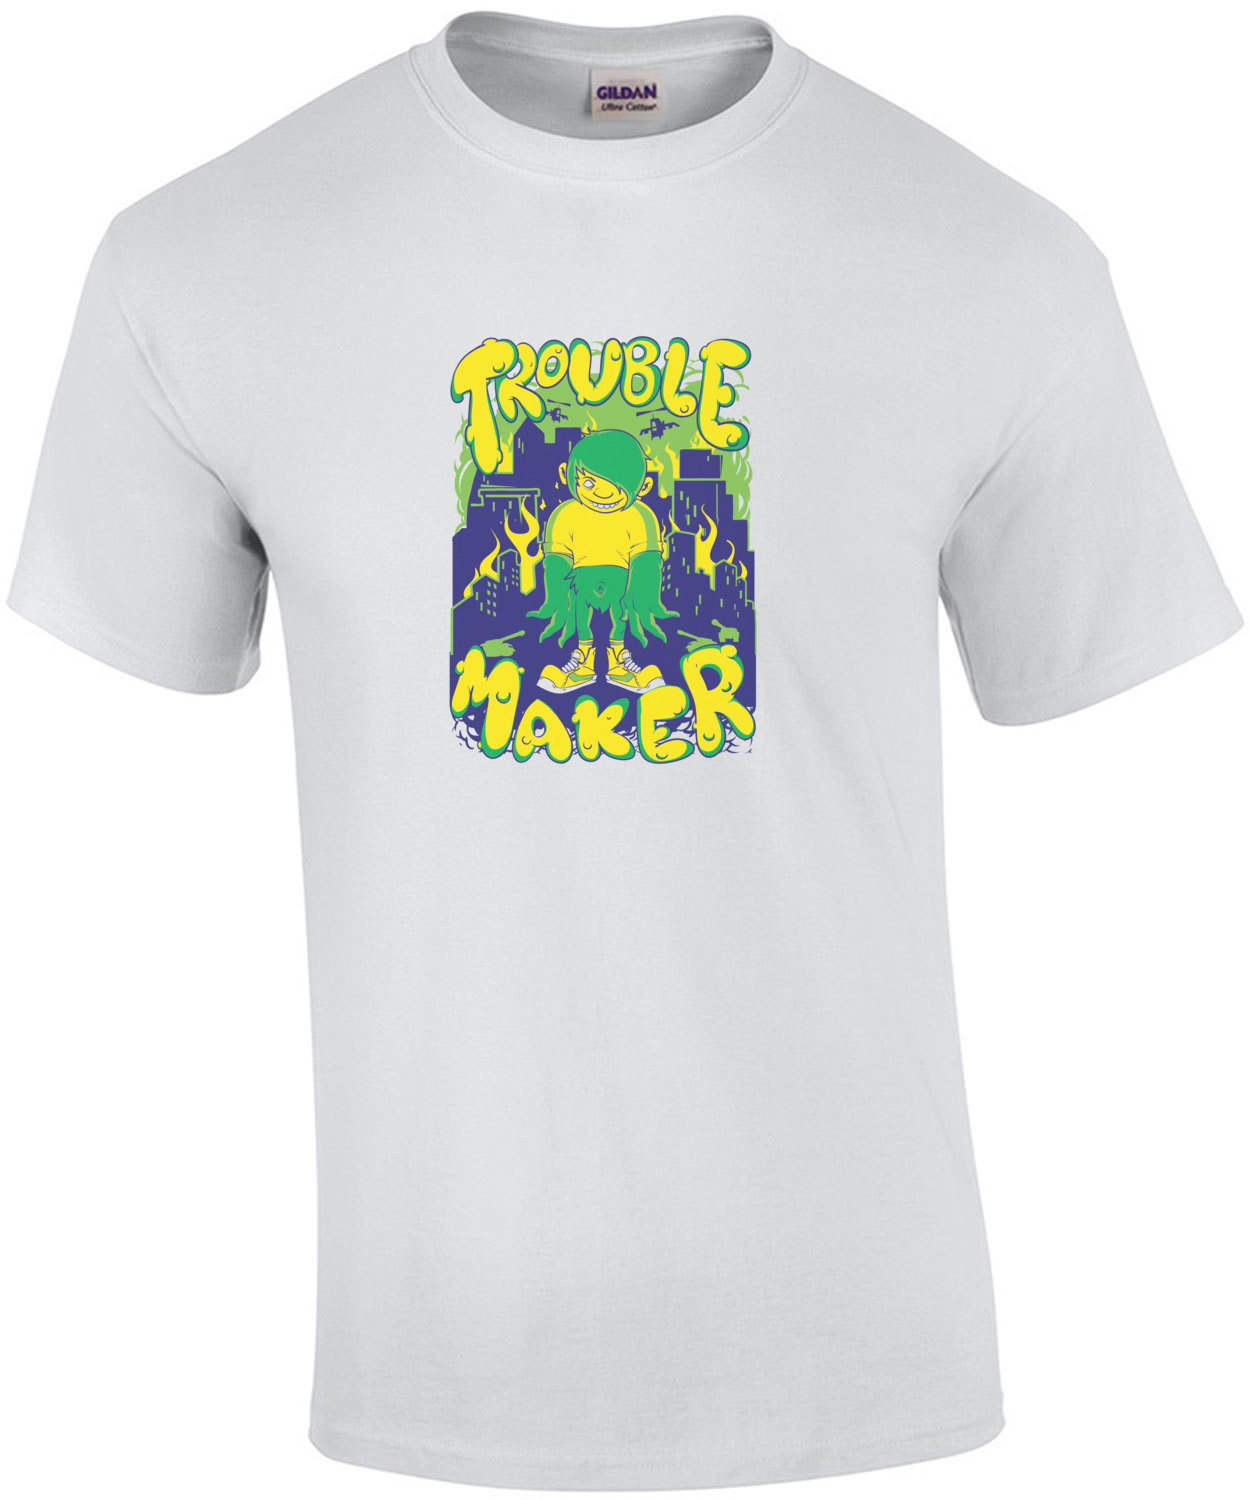 Trouble Maker Graphic T-Shirt